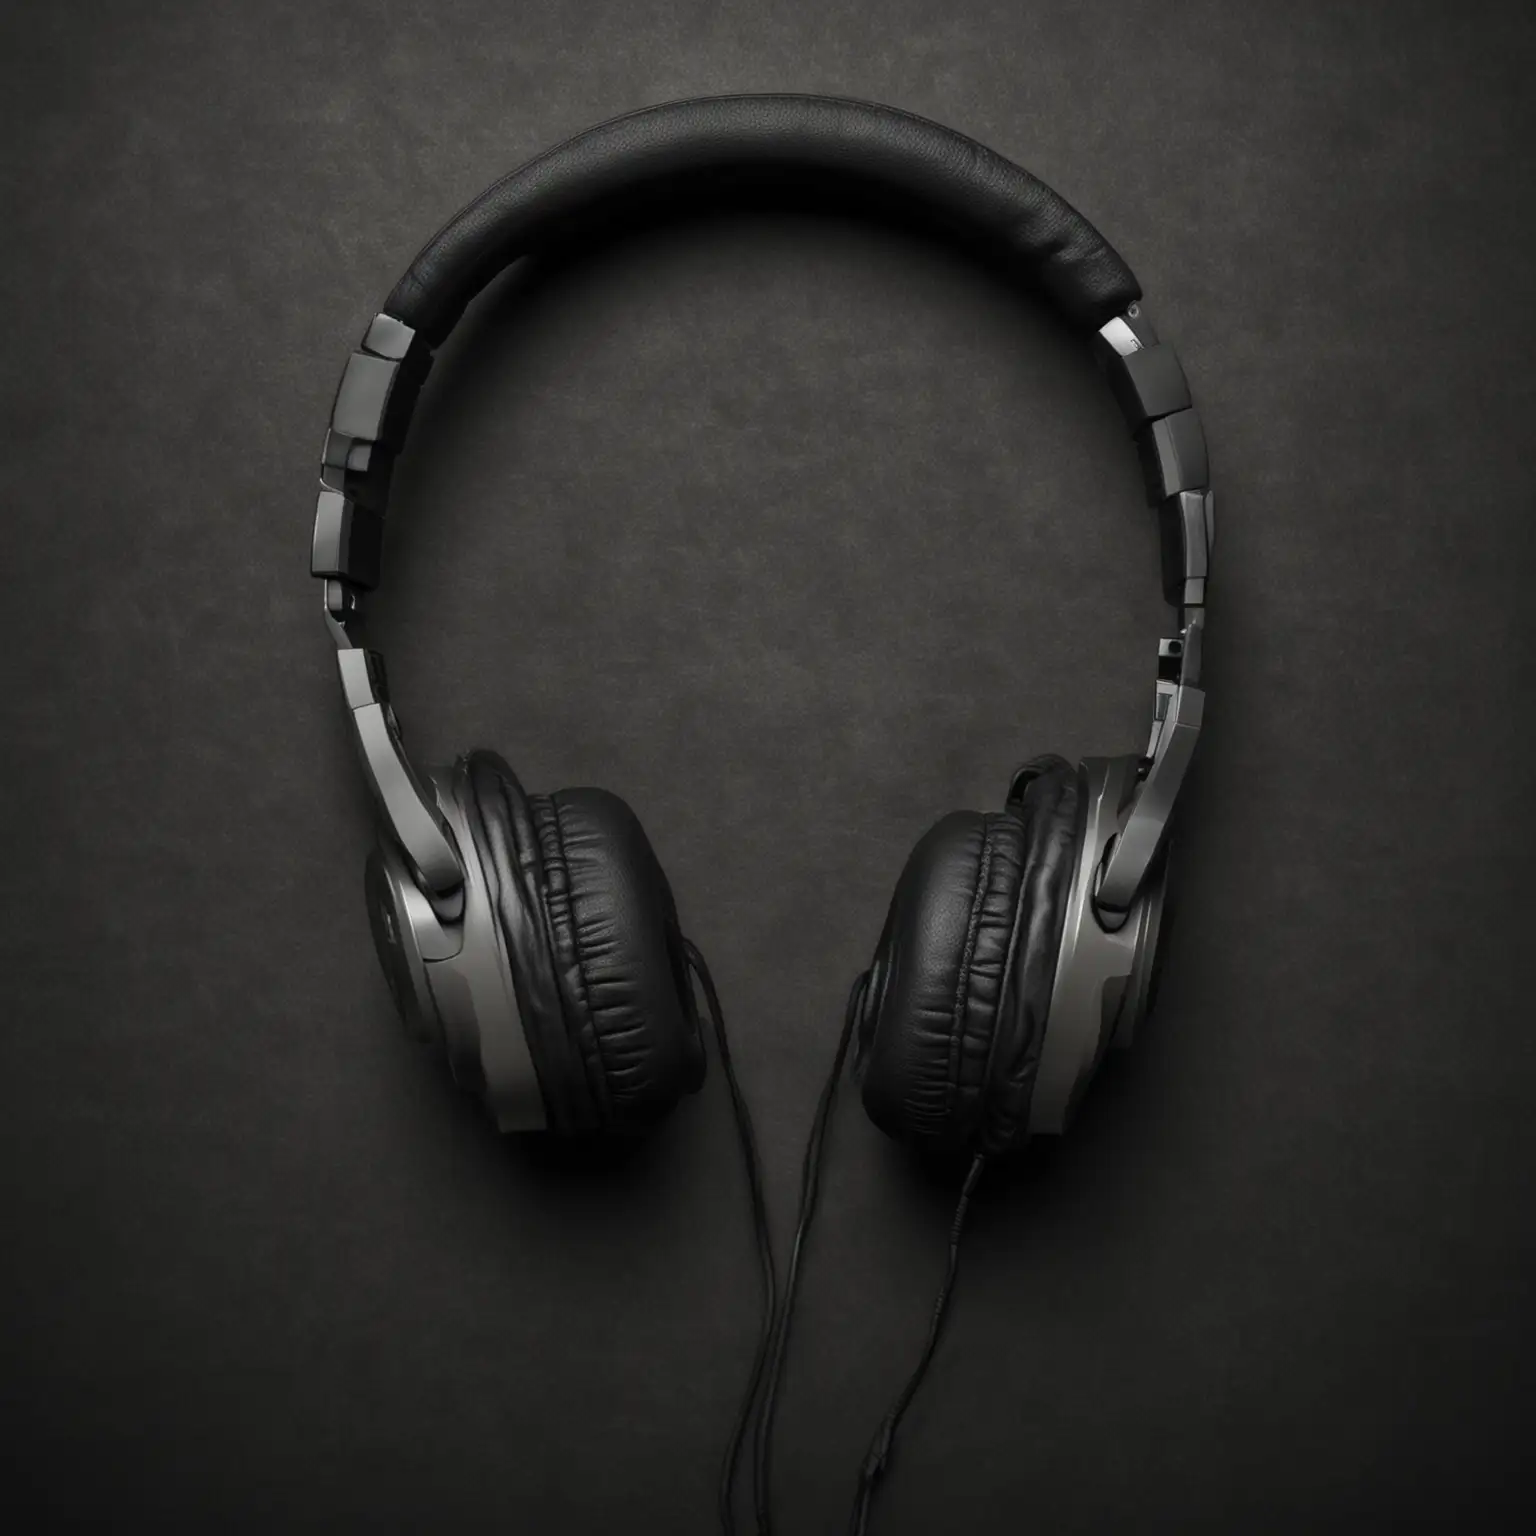 Realistic Headphones on Dark Background